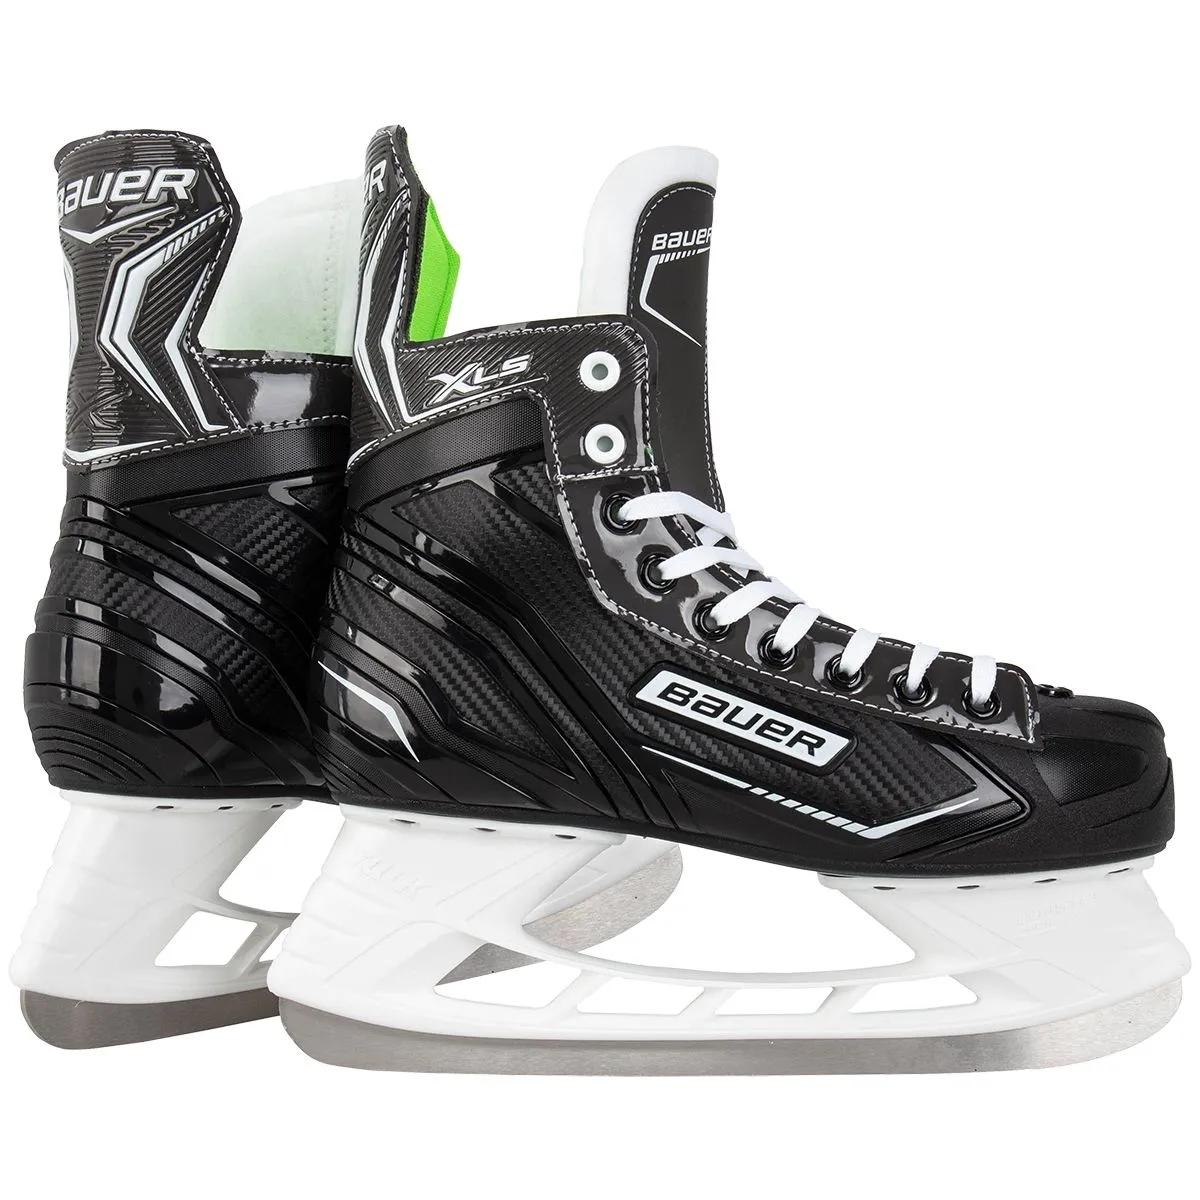 Bauer X-LS Jr. Hockey Skatesproduct zoom image #1